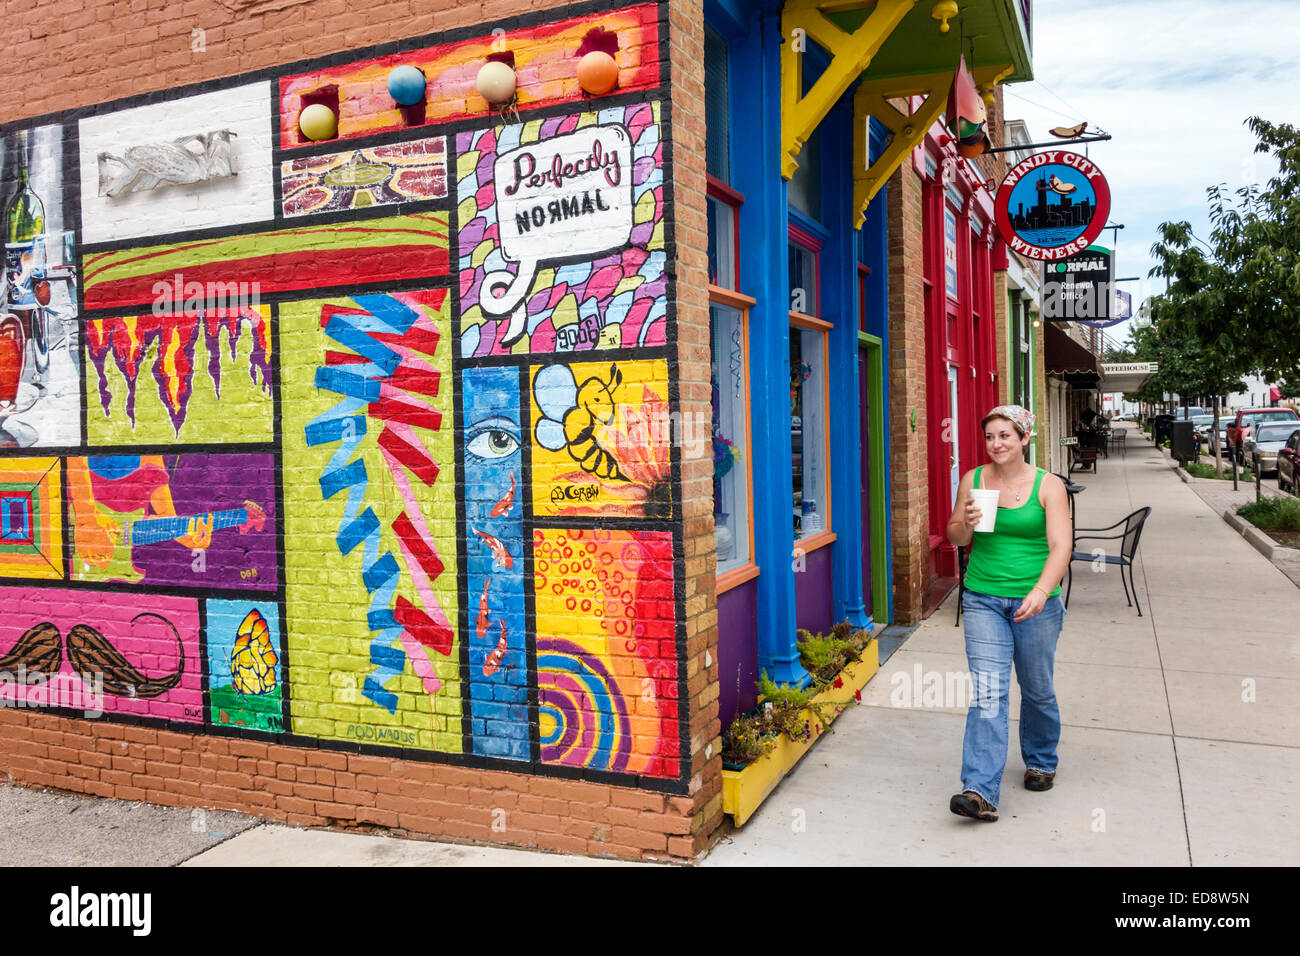 Illinois normal,Uptown,East Beaufort Street,The Pod,galería de arte,tienda,mural,colorido,mujer mujer mujeres,caminar,IL140909025 Foto de stock